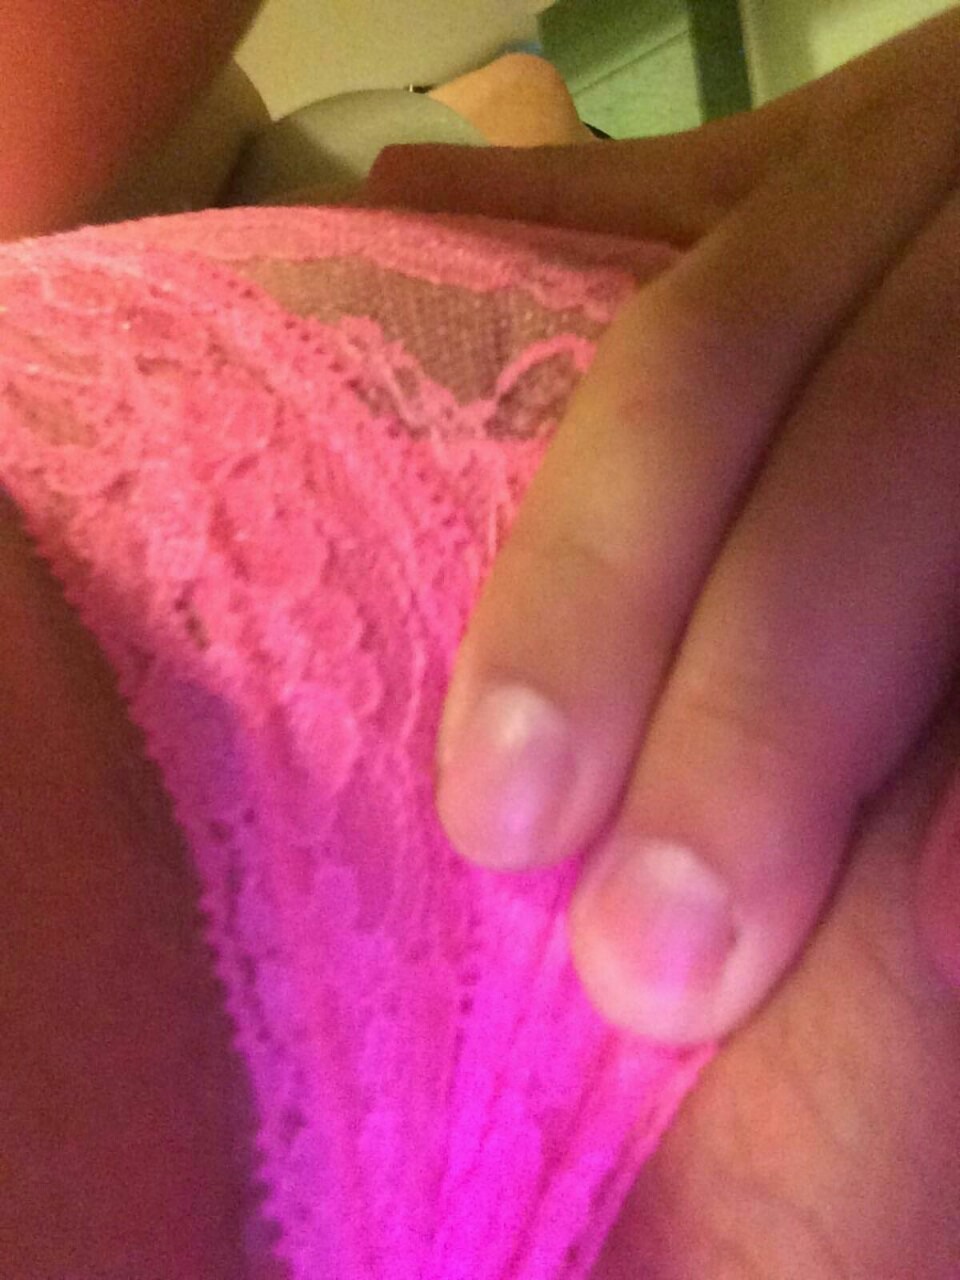 jpangel101:  Super hot kik girl Kelly sends pics of her great body, big tits, feet